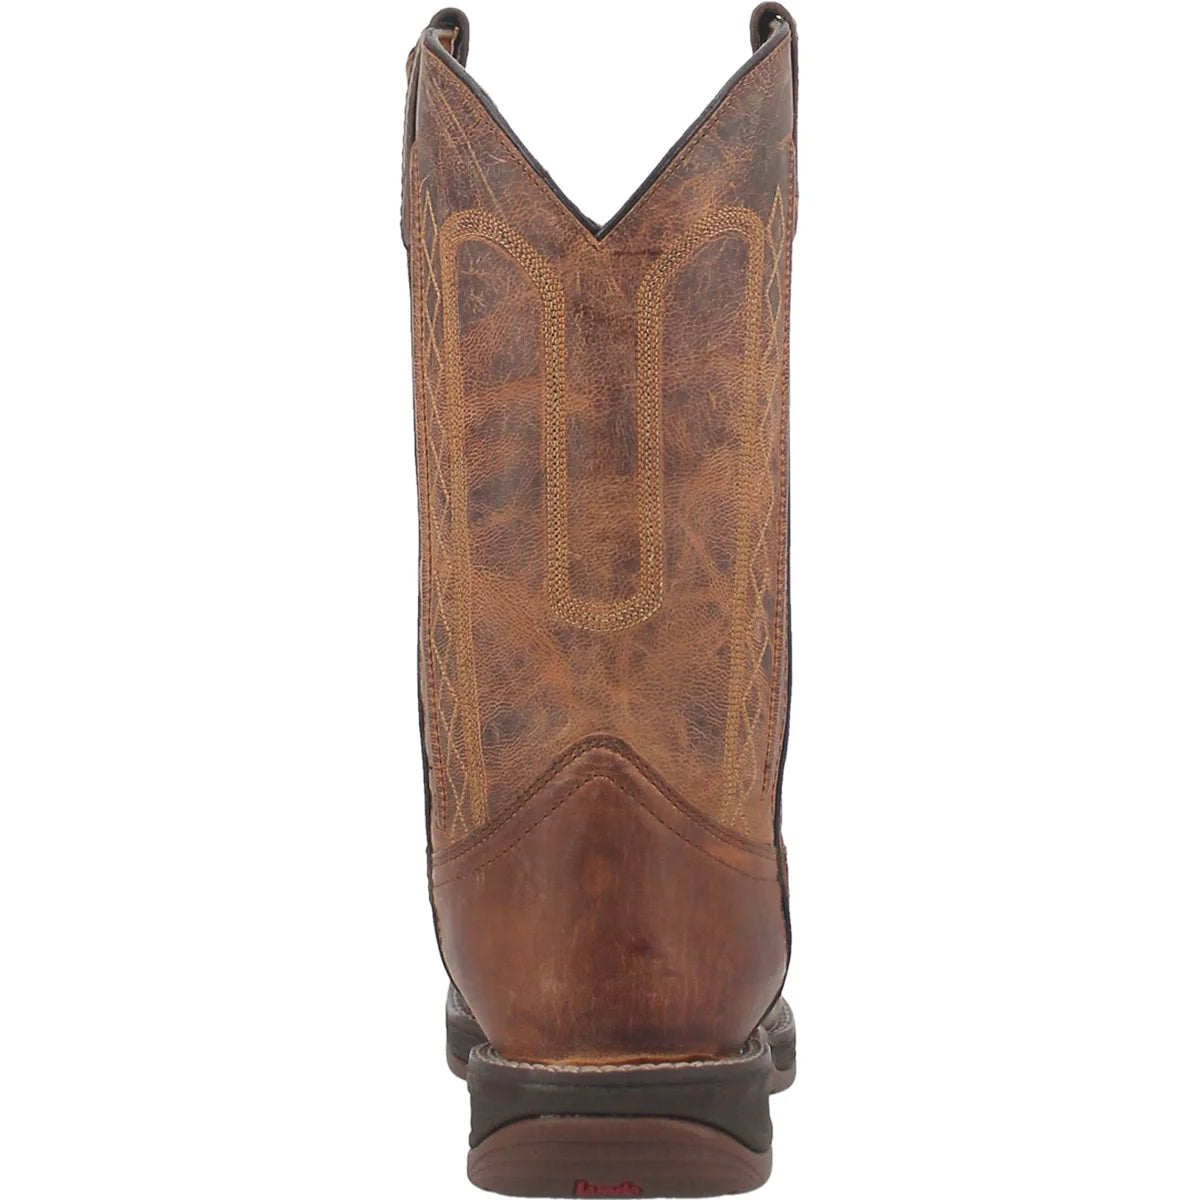 Laredo Men’s Bennett Tan Leather Boots-CLEARANCE-NO RETURNS